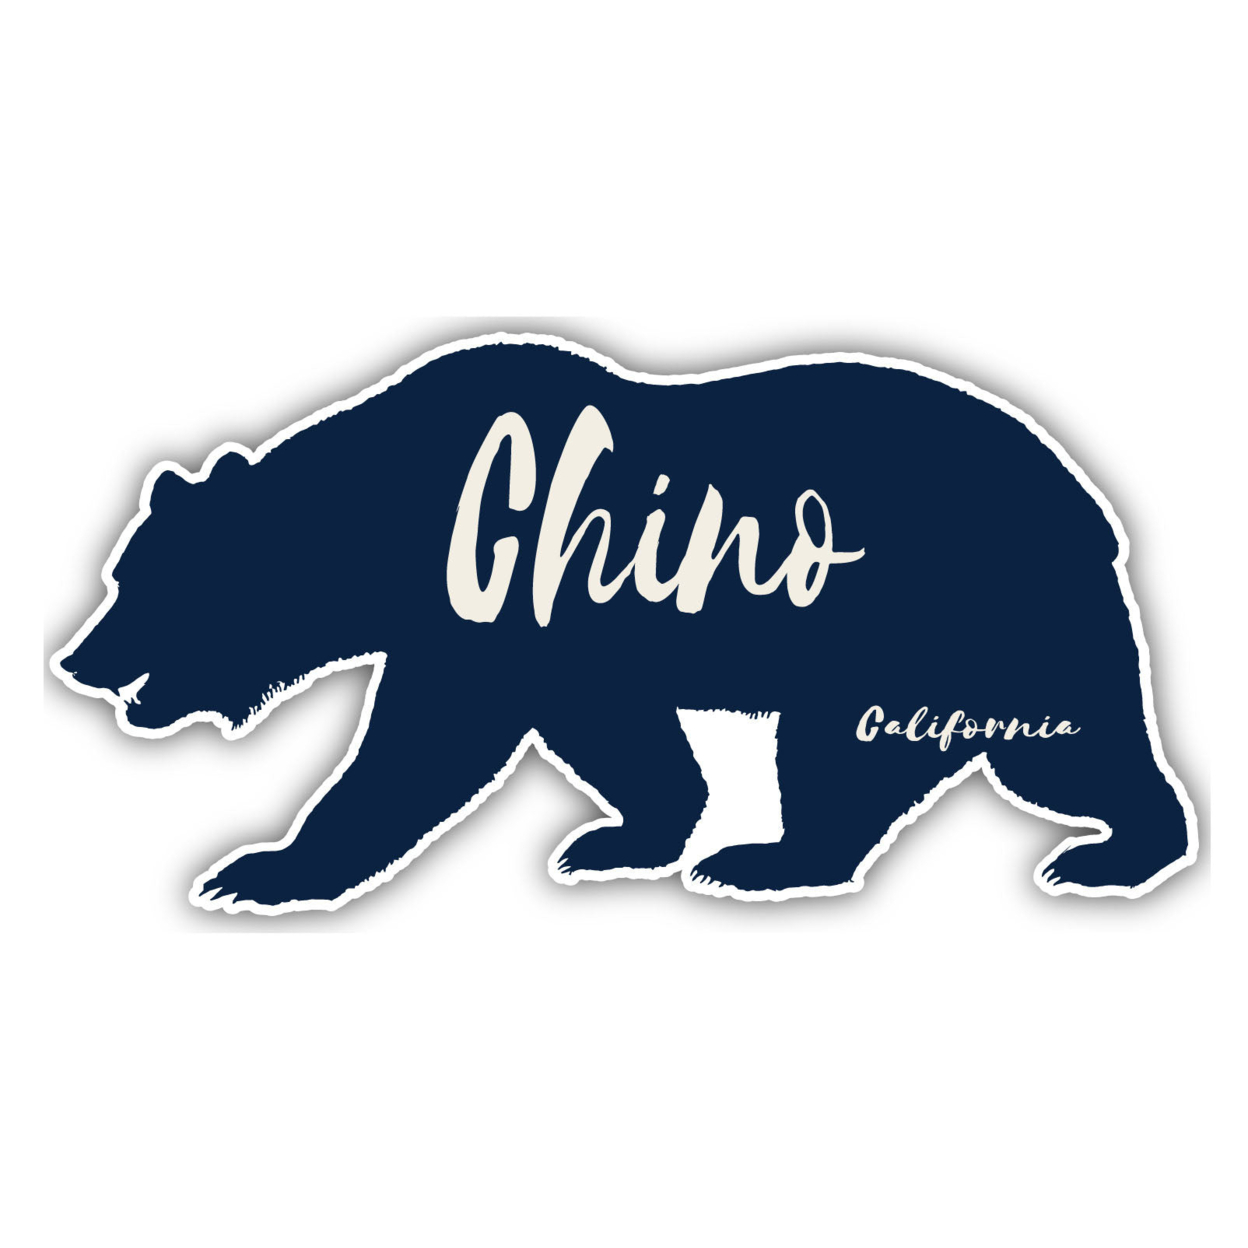 Chino California Souvenir Decorative Stickers (Choose Theme And Size) - Single Unit, 4-Inch, Bear